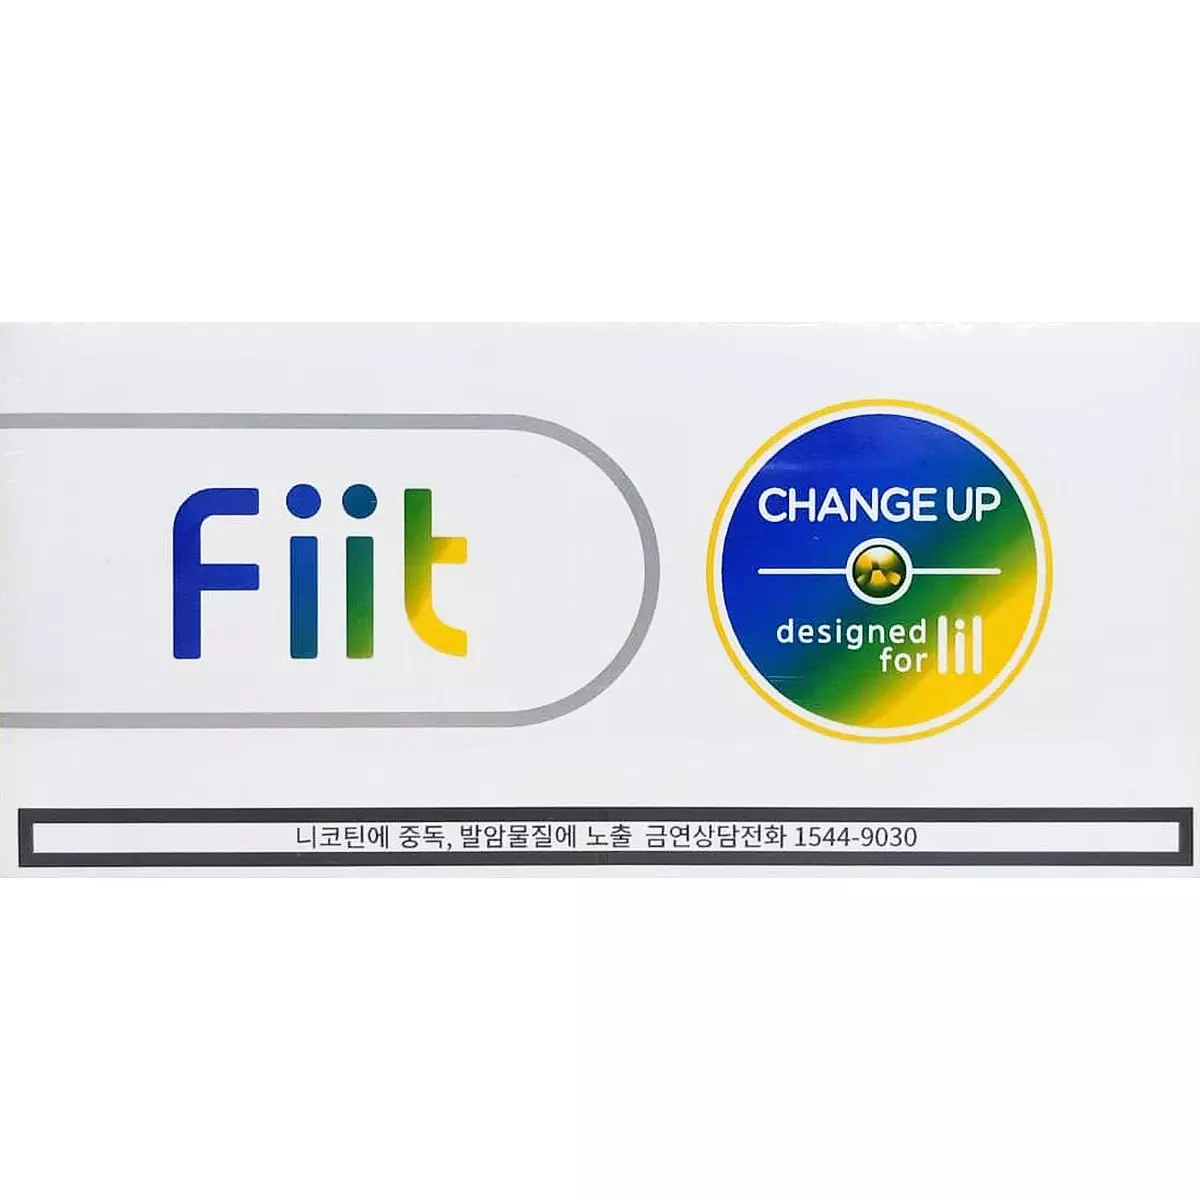 Fiit - Change Up